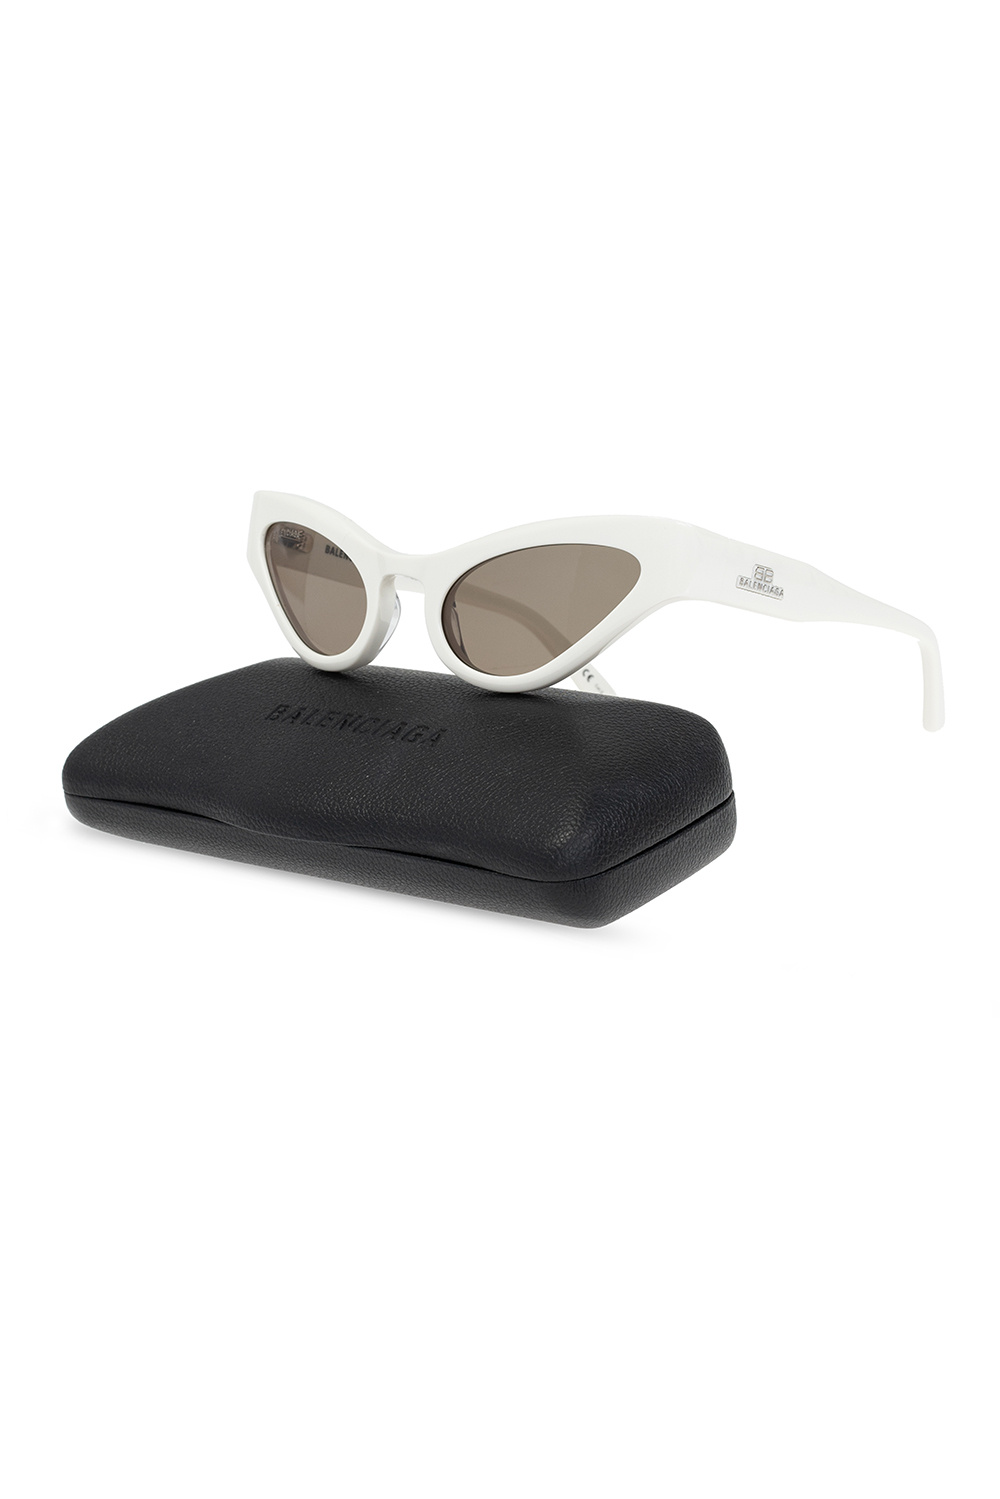 Balenciaga Rb3543 Silver Sunglasses